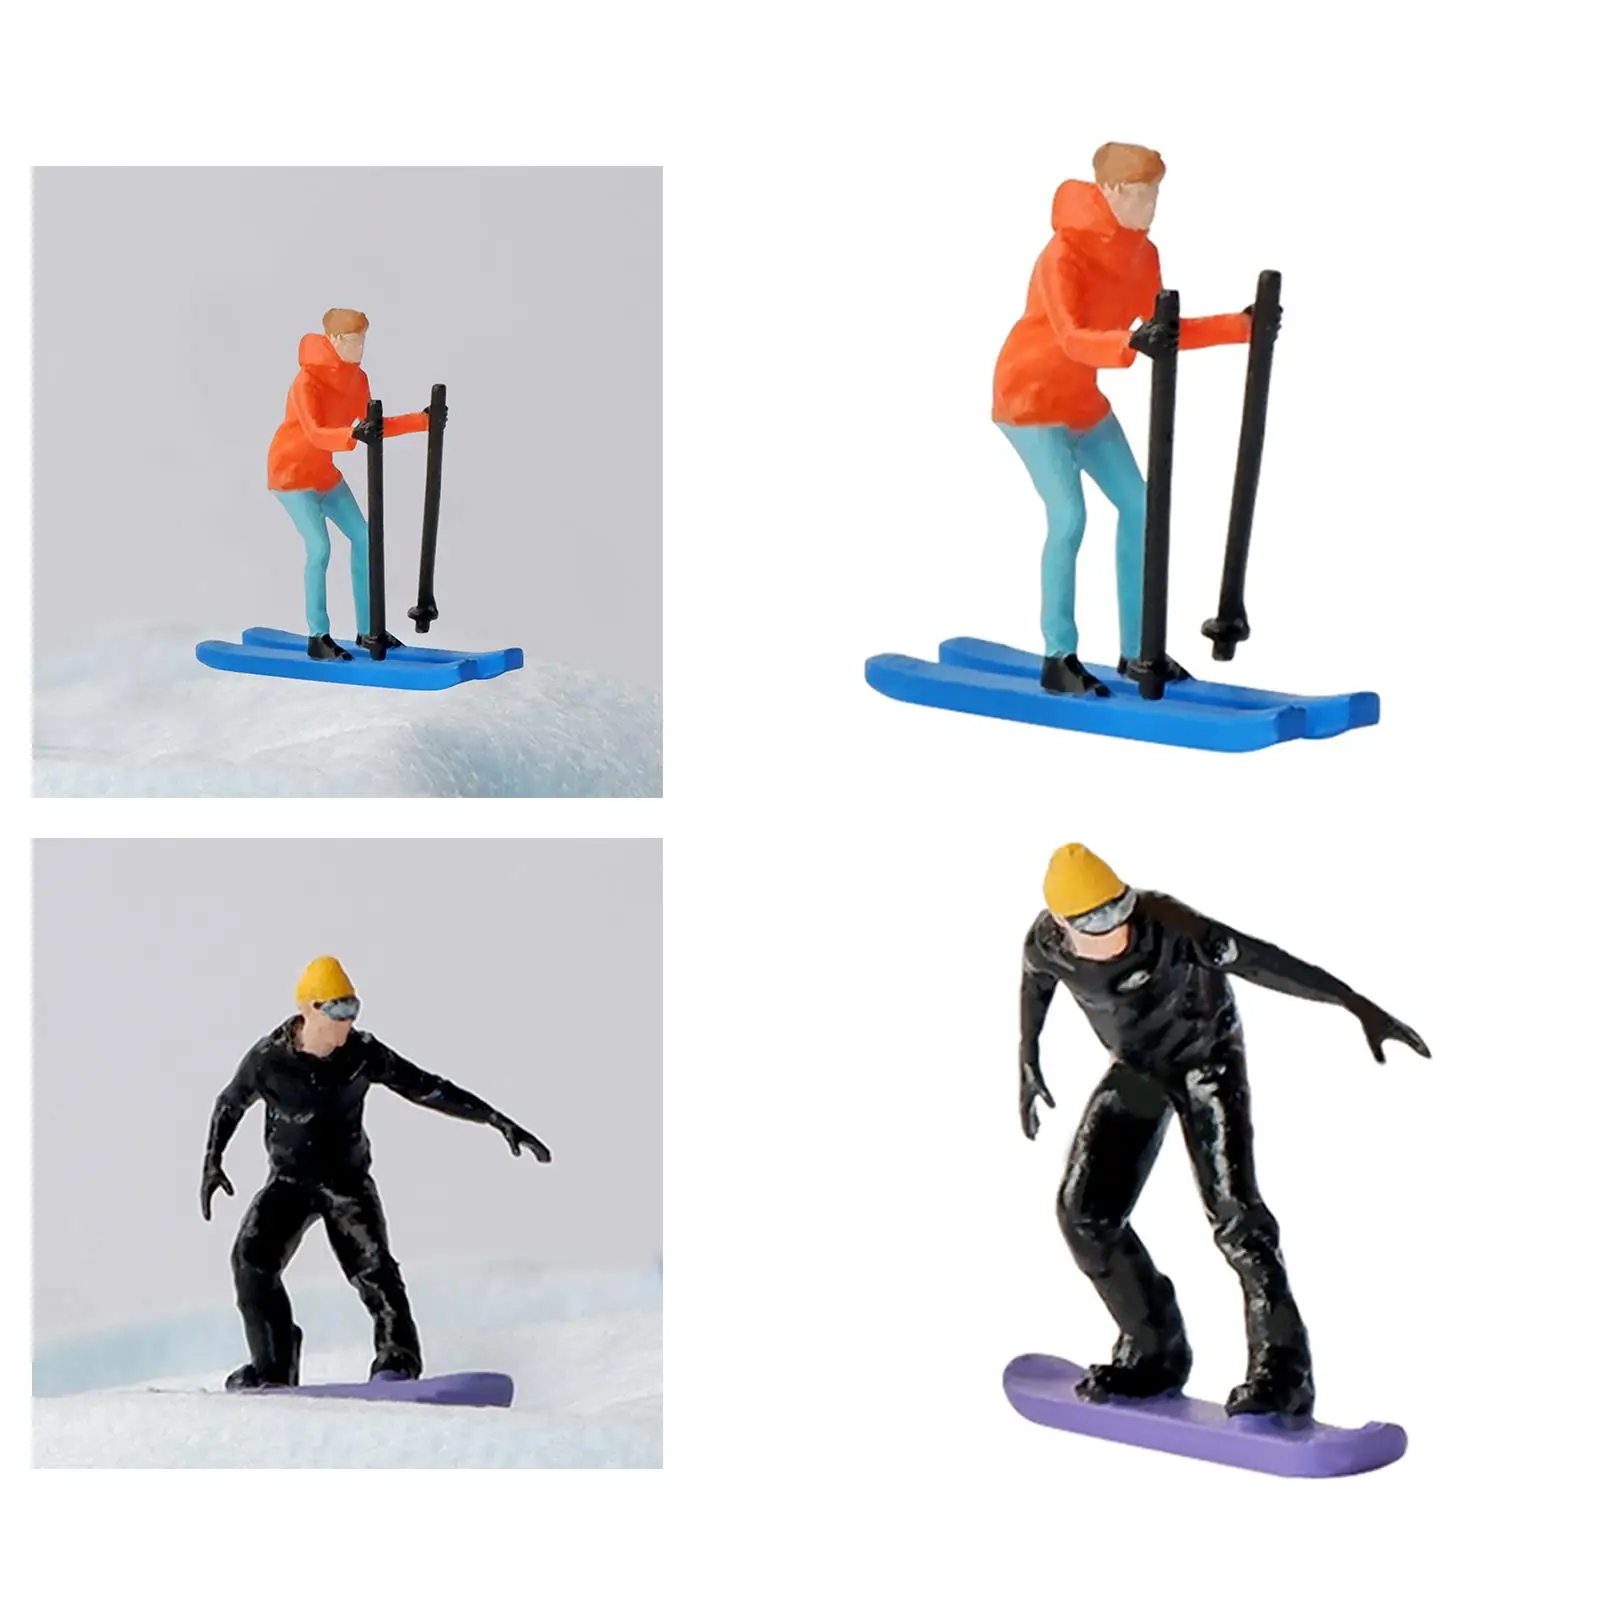 1/64 Scale Miniature Model Skiing Figures Simulation Figurines Mini People Model for DIY Scene Sand Table Layout Decoration